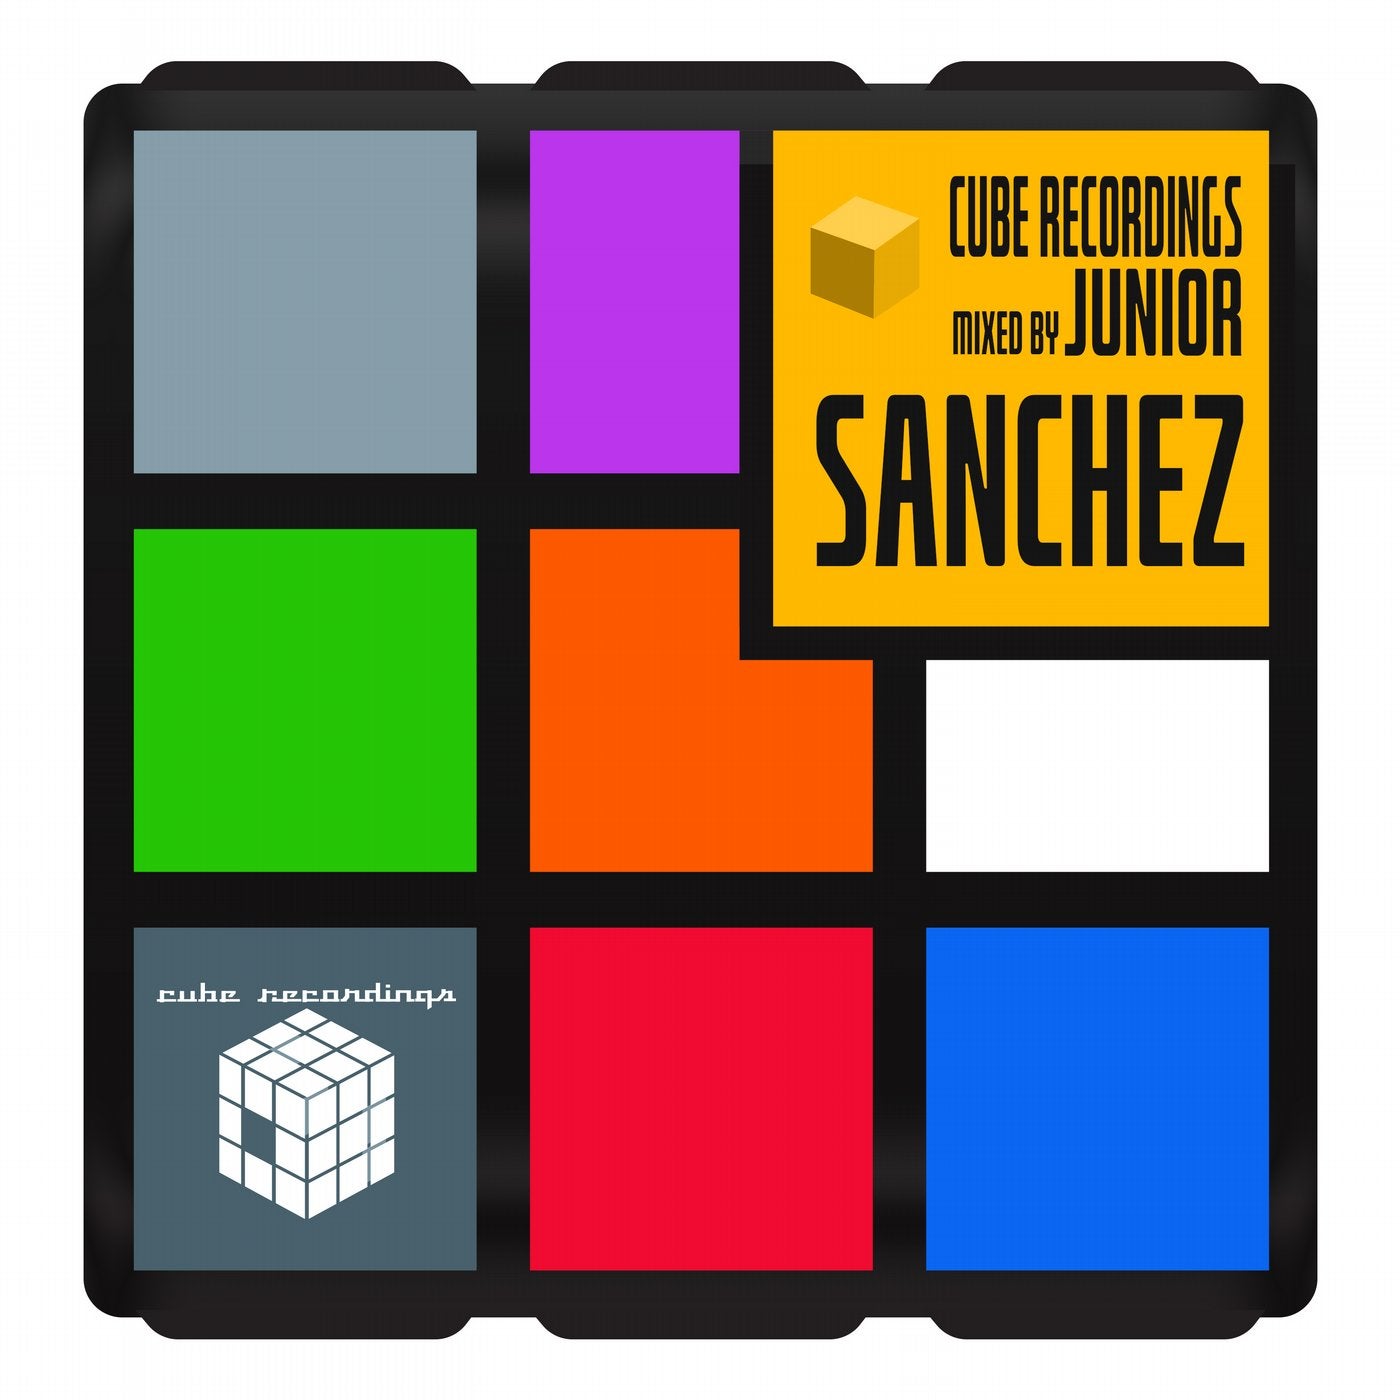 Cube Recordings (Mixed by Junior Sanchez)